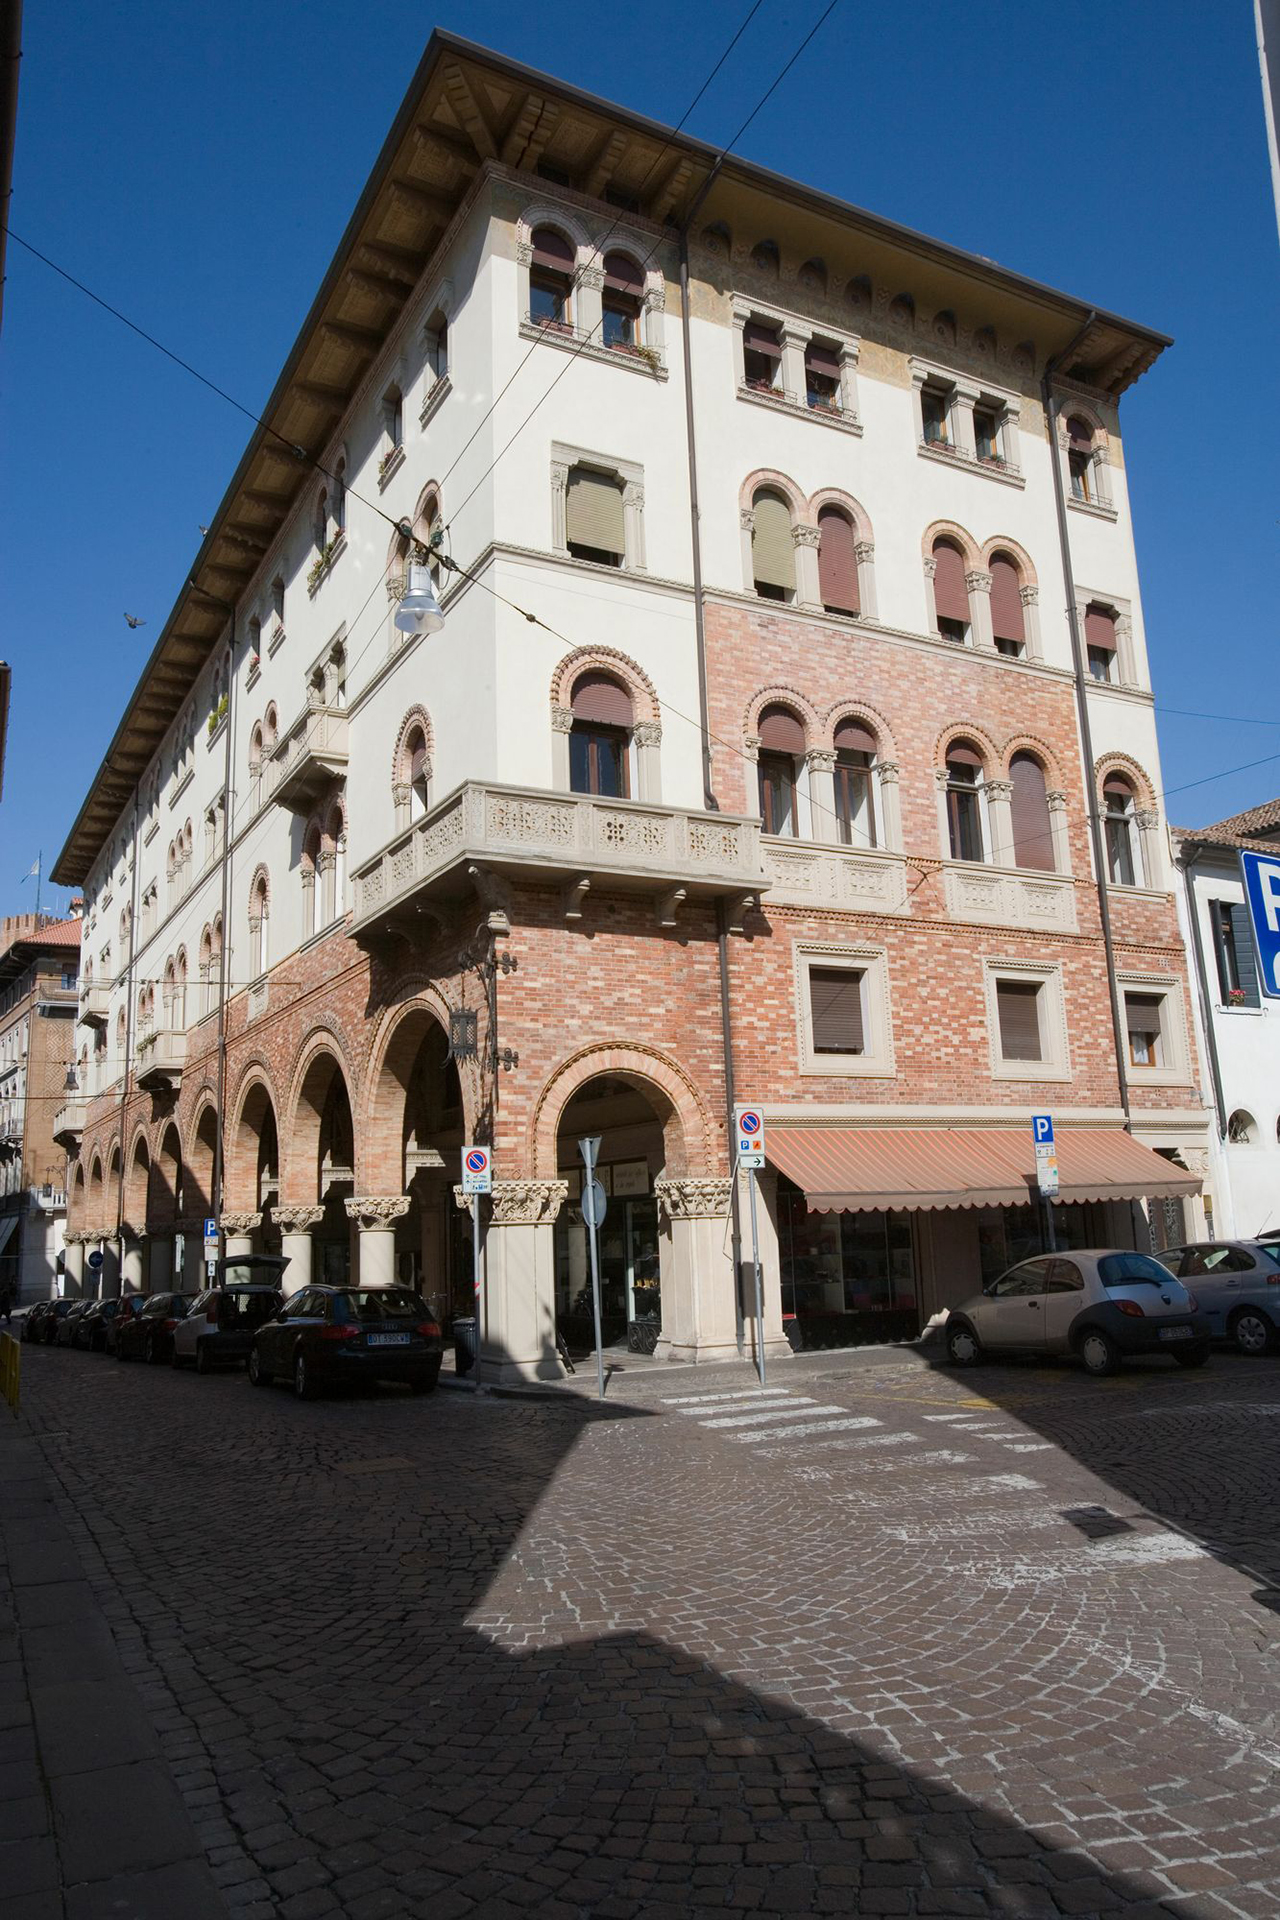 Palazzo in via Regina Margherita (palazzo) - Treviso (TV) 